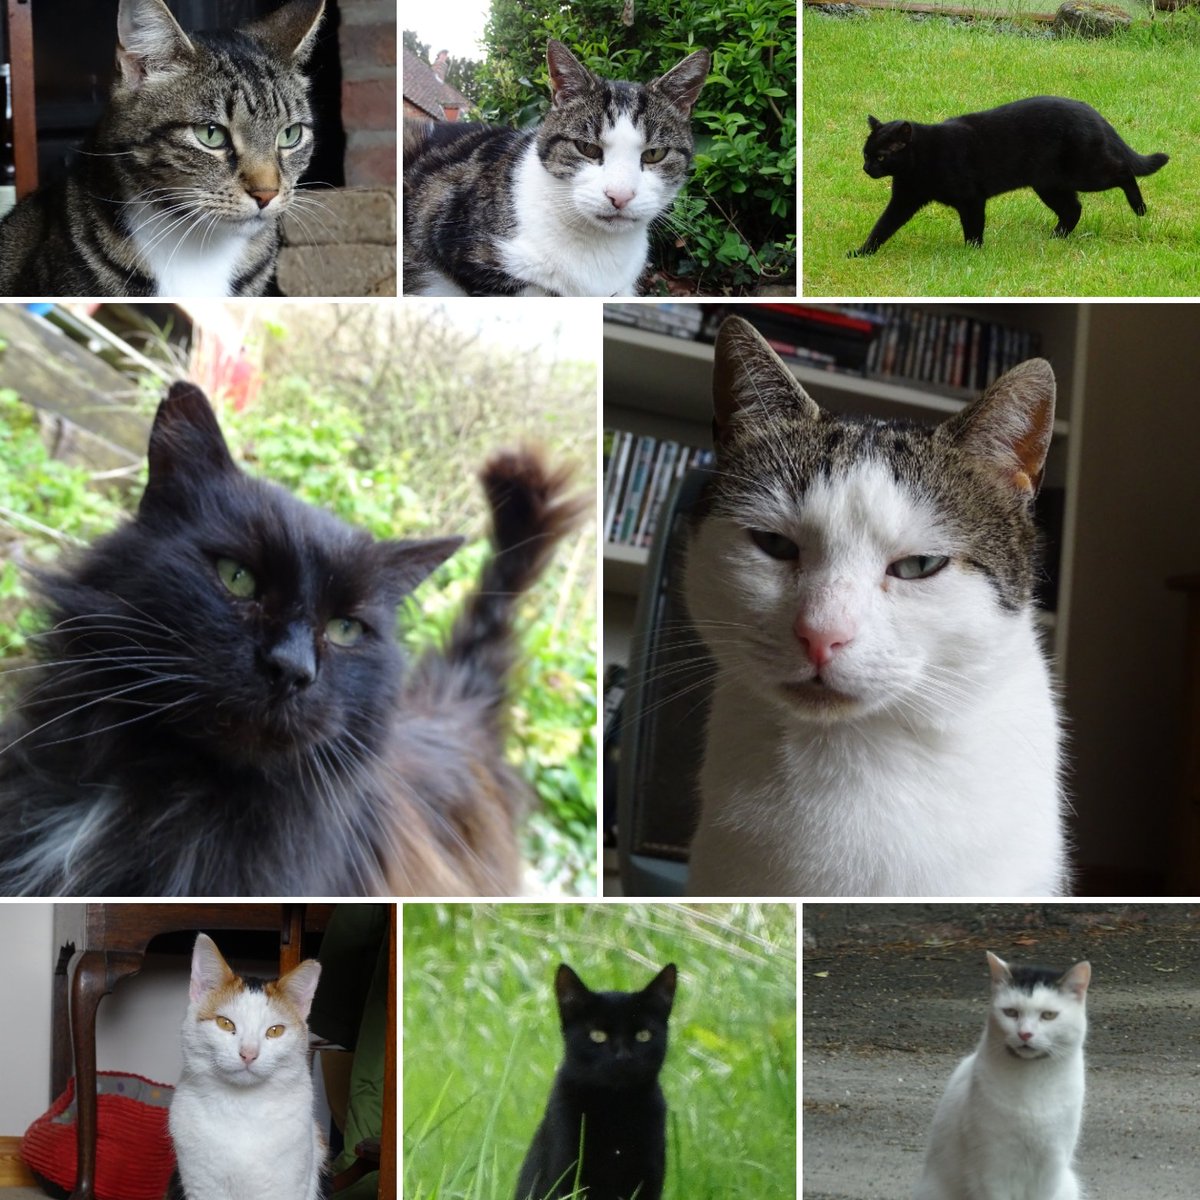 All the cats on Caturday 😺 #cat #cats #catlover #catlife #catlovers #caturday #caturdaycuties #caturday365 #caturdaymorning #cats_of_world #felines #felinefriends #furry #furryfriends #slinkymalinki #furryfandom